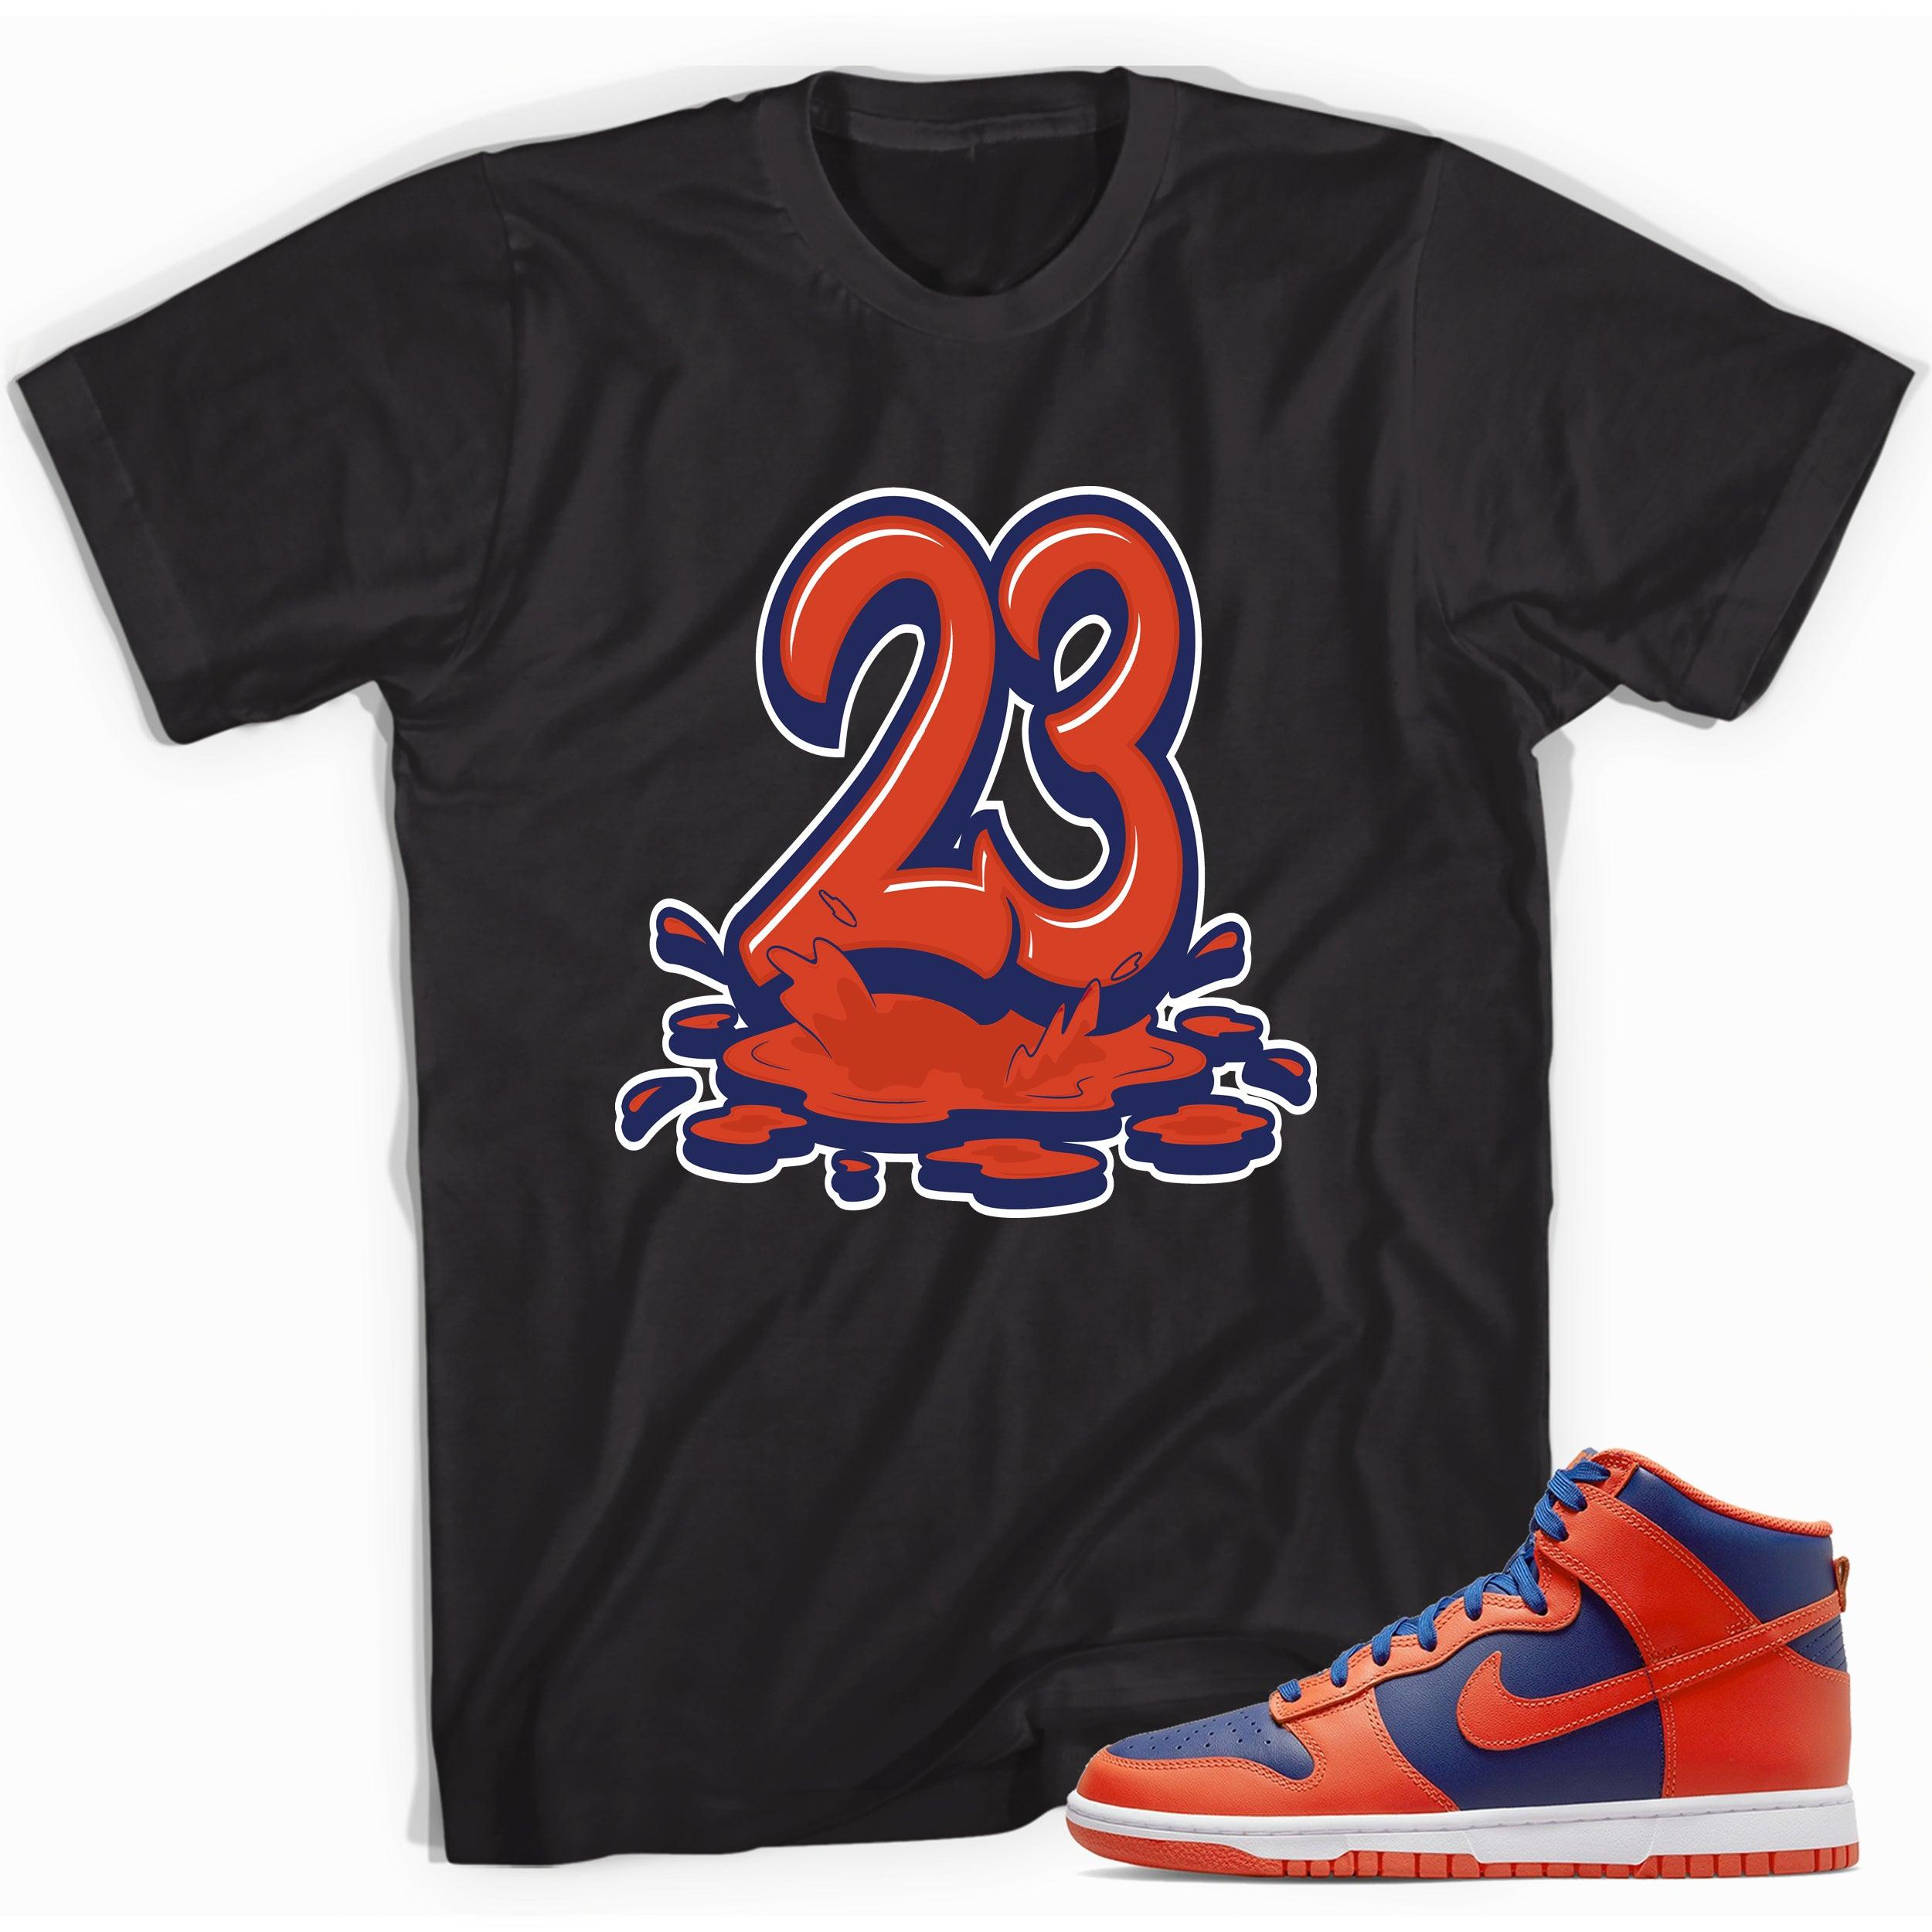 23 Melting Shirt Nike Dunk High Knicks photo